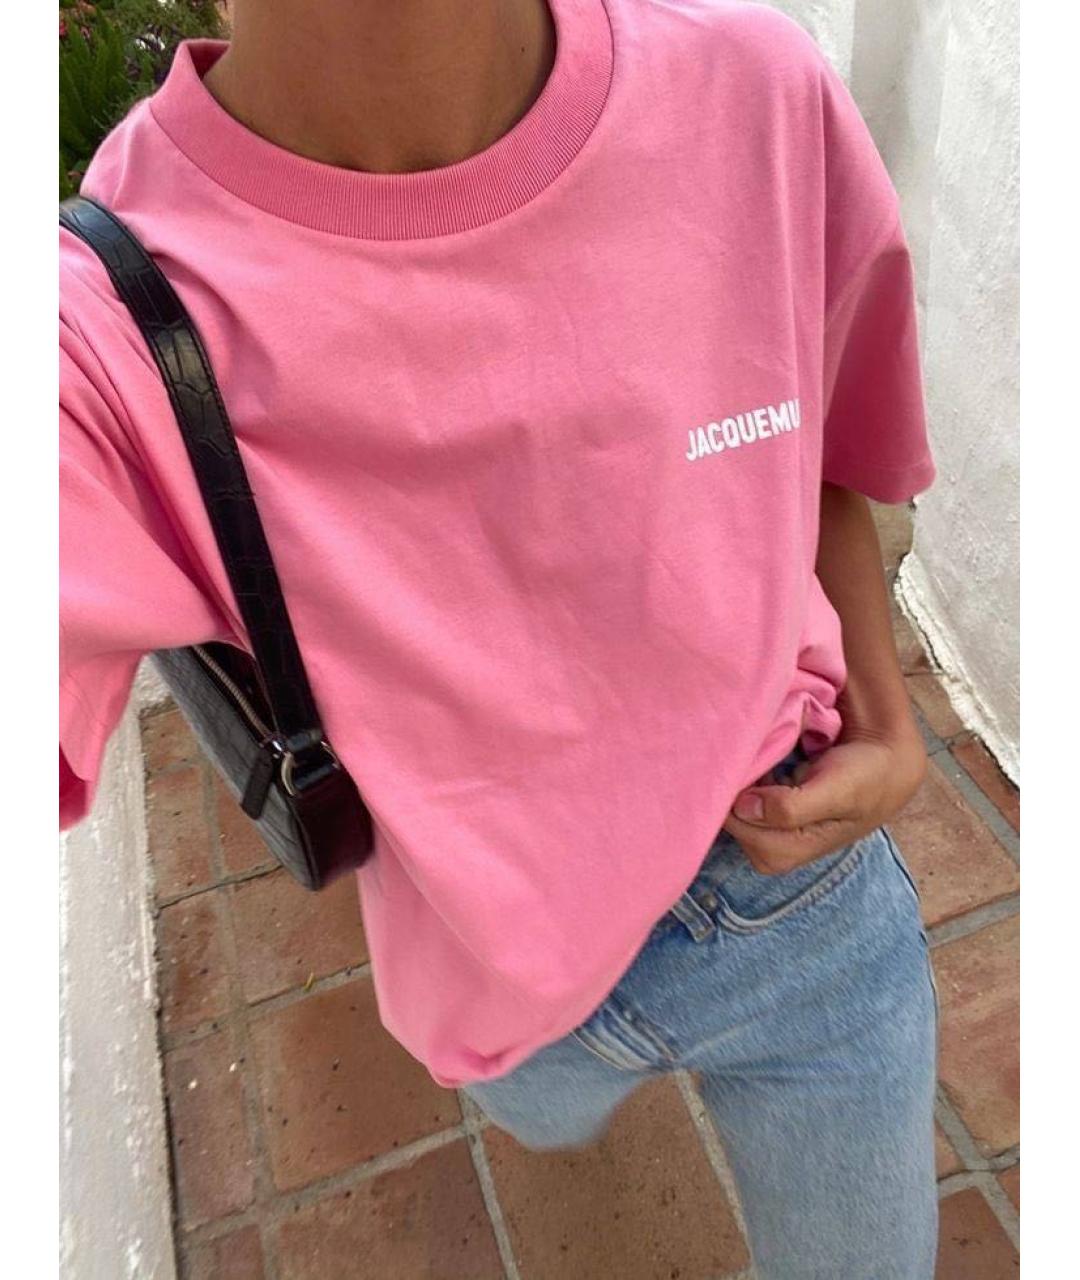 JACQUEMUS Розовая хлопковая футболка, фото 2